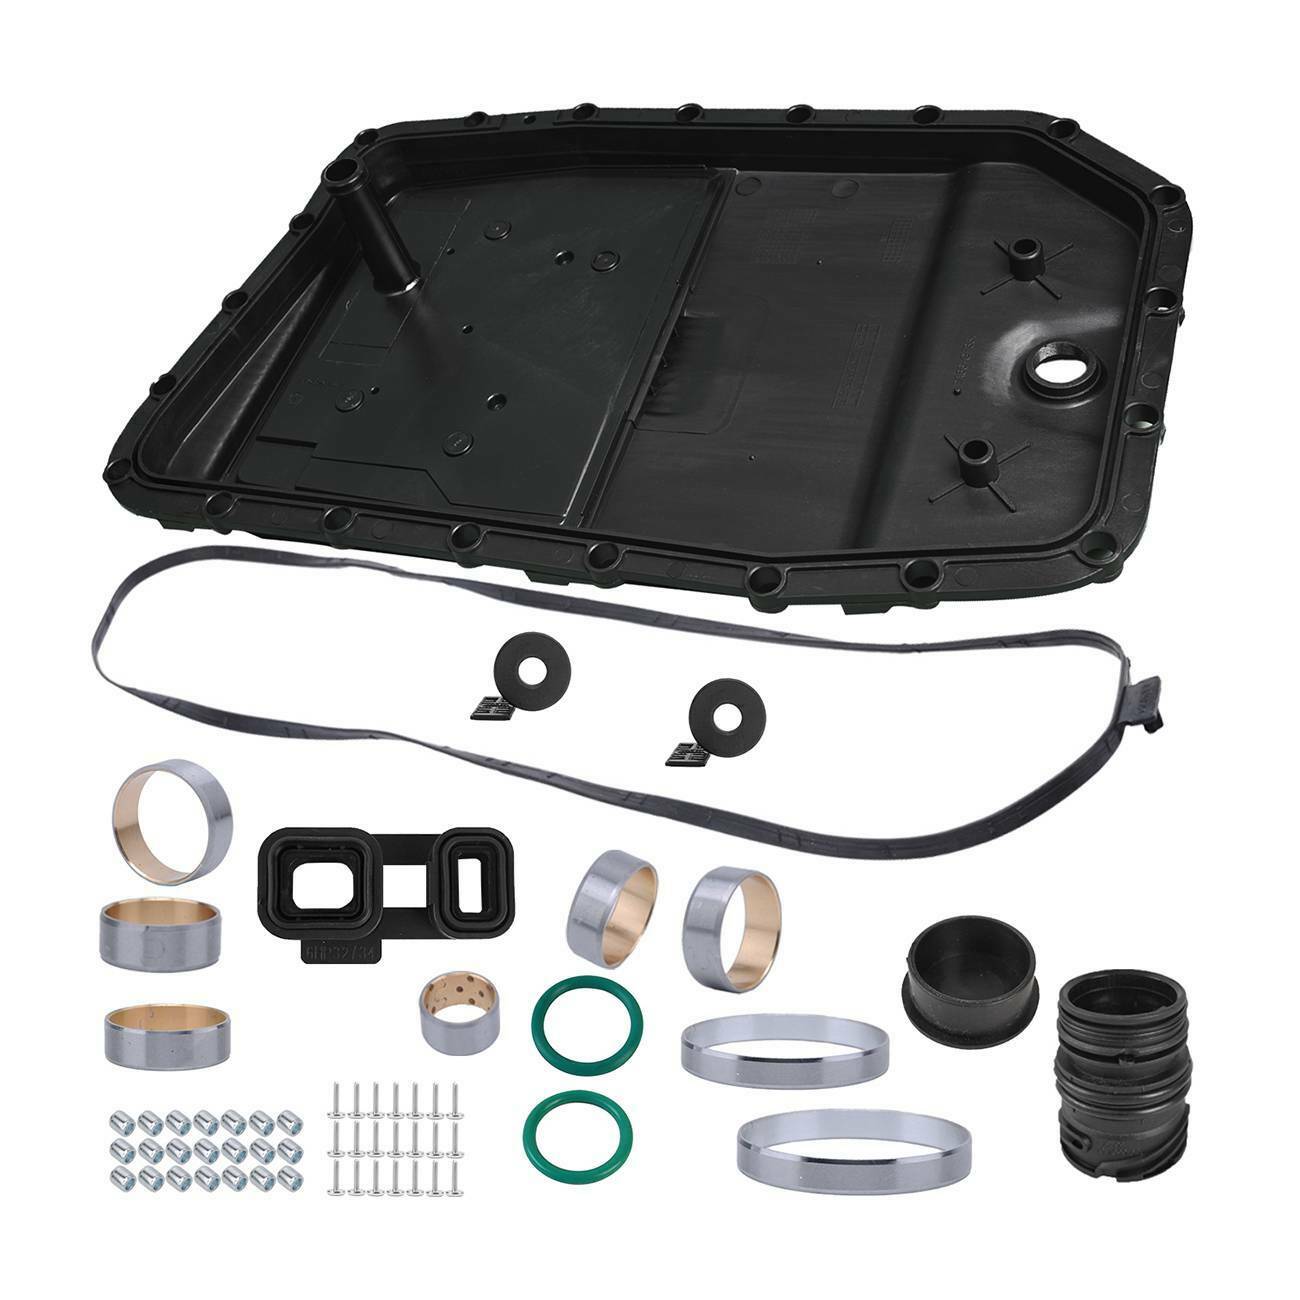 Auto Trans Oil Pan Filter + Repair Kit + Gasket for BMW E60 E70 E83 E90 German Made